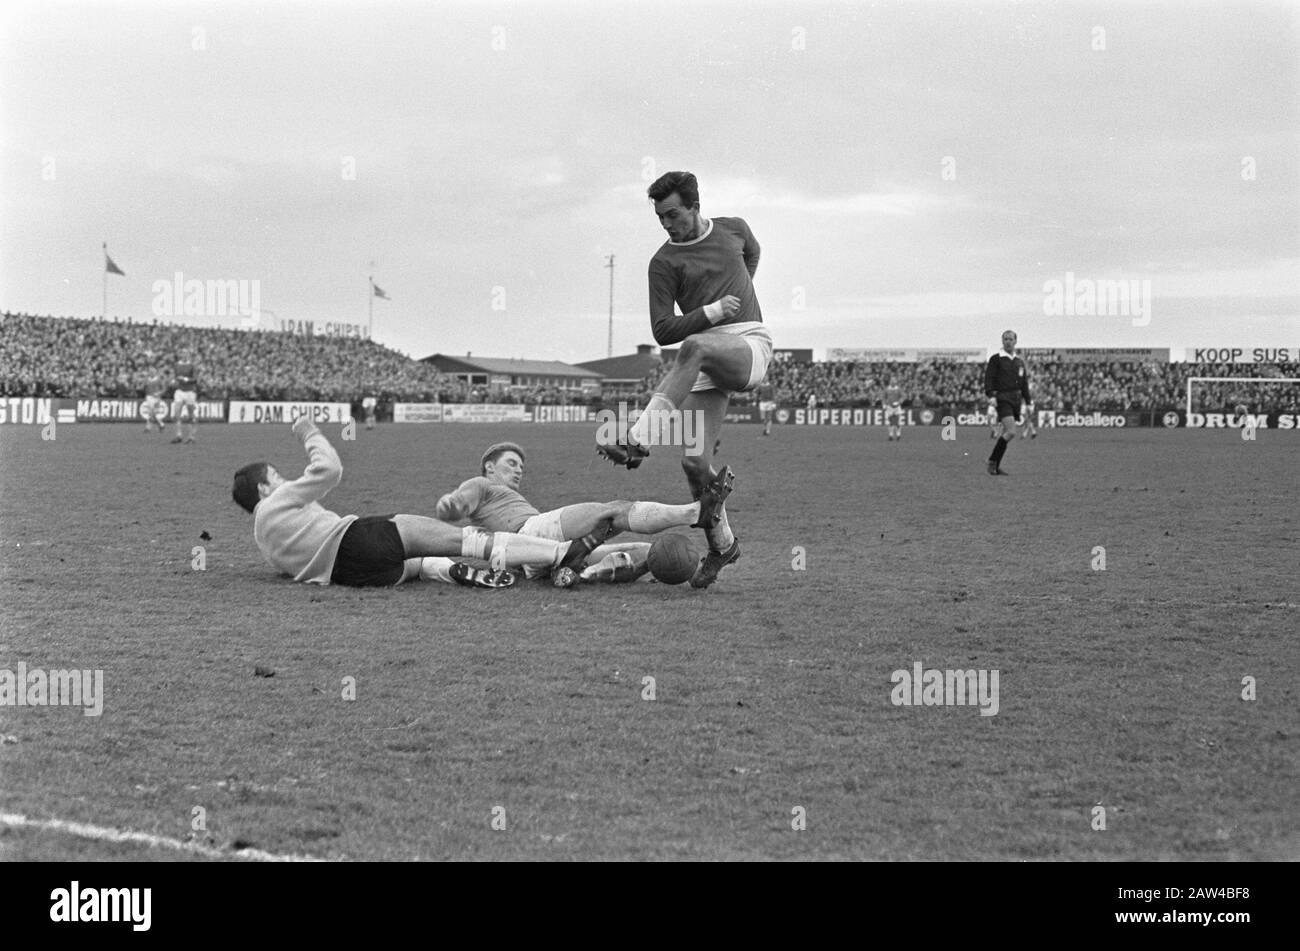 RCH against AZ 67 0-2. Keeper Forest RCH beaten on the floor Date: December 26, 1967 Location: Heemstede Keywords: sport, football Stock Photo